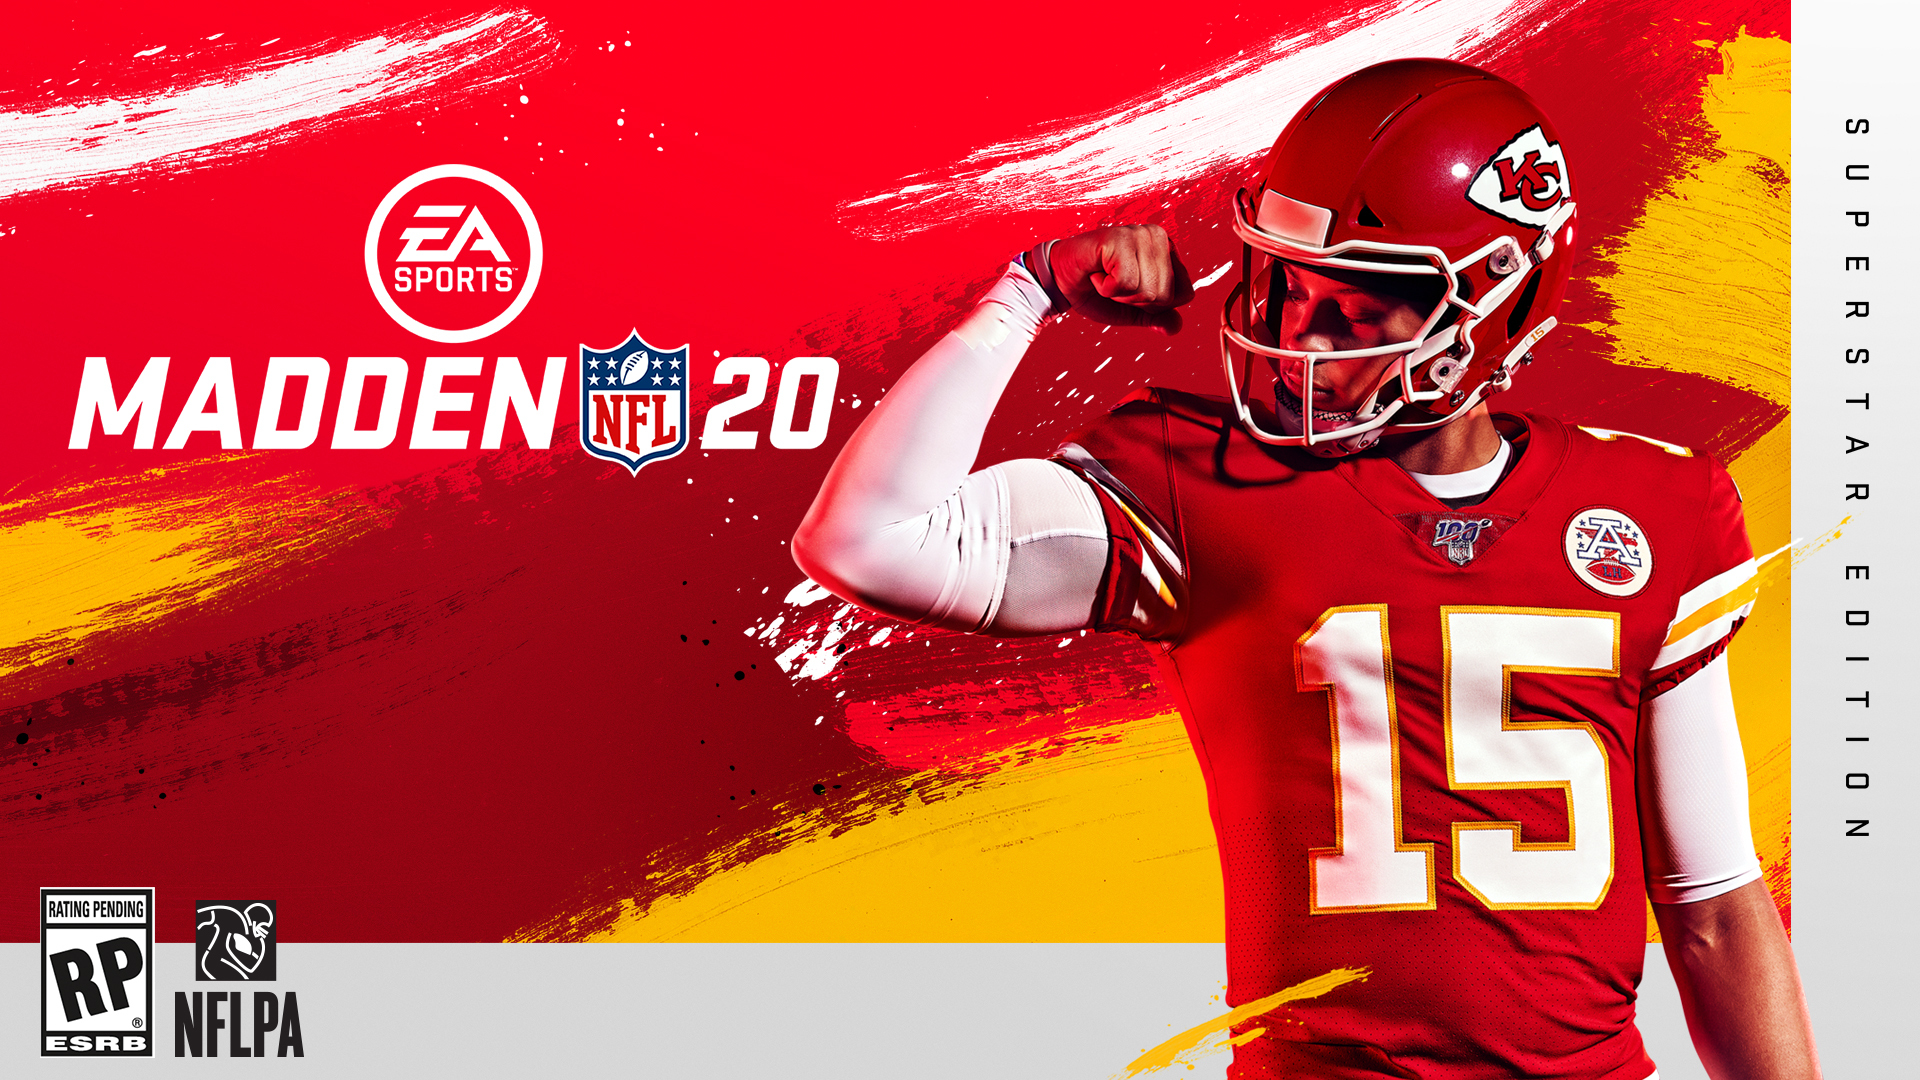 Madden NFL 20 (EA Sports)